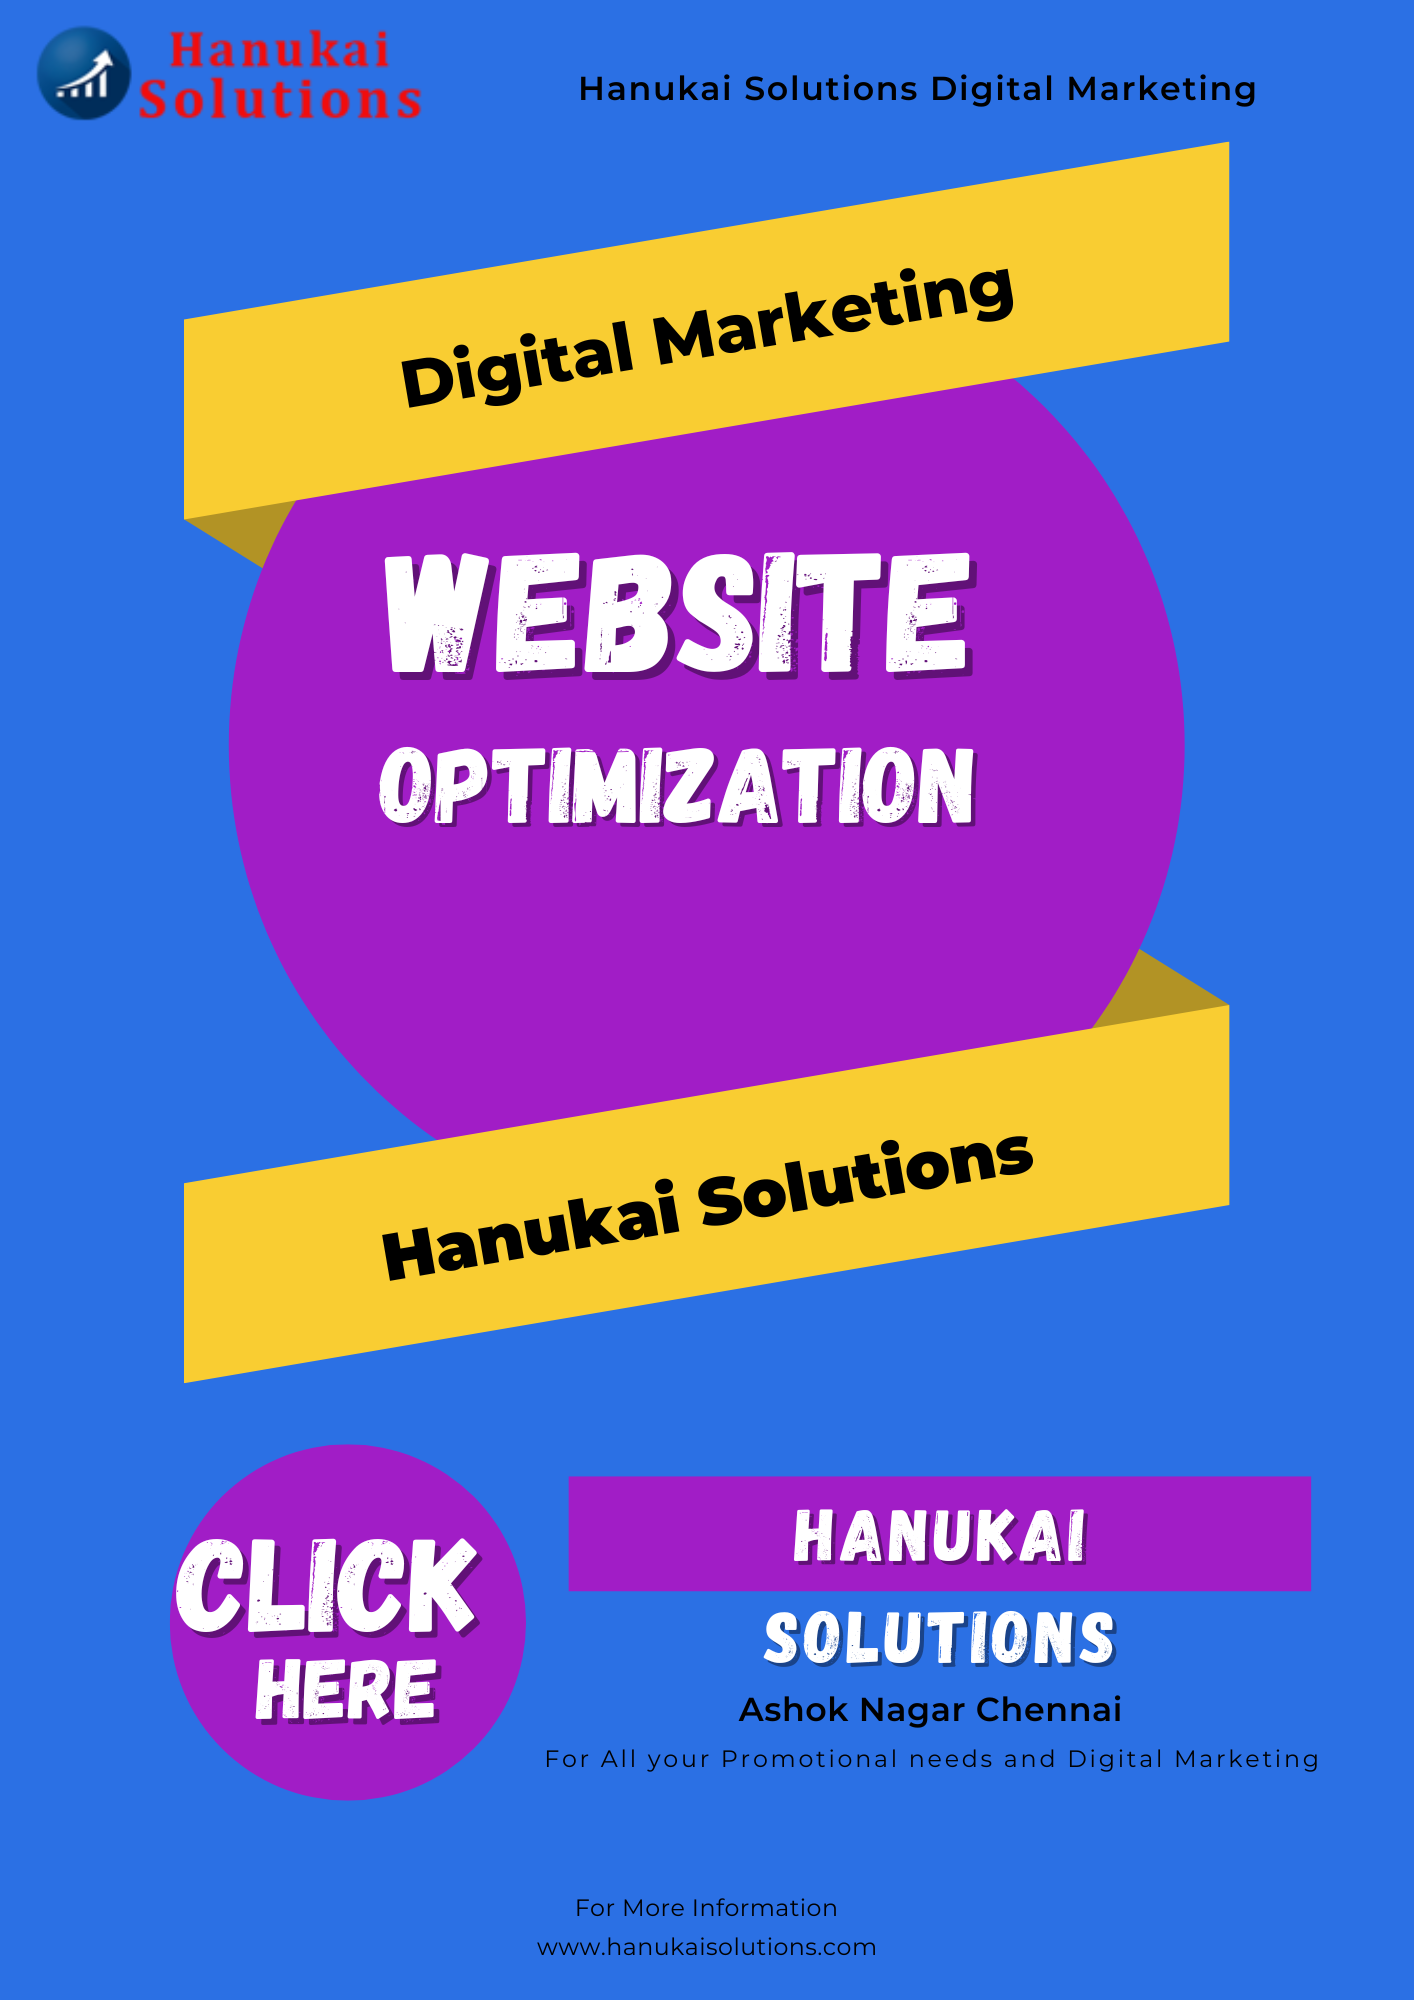 Hanukai Solutions Digital Marketing Services